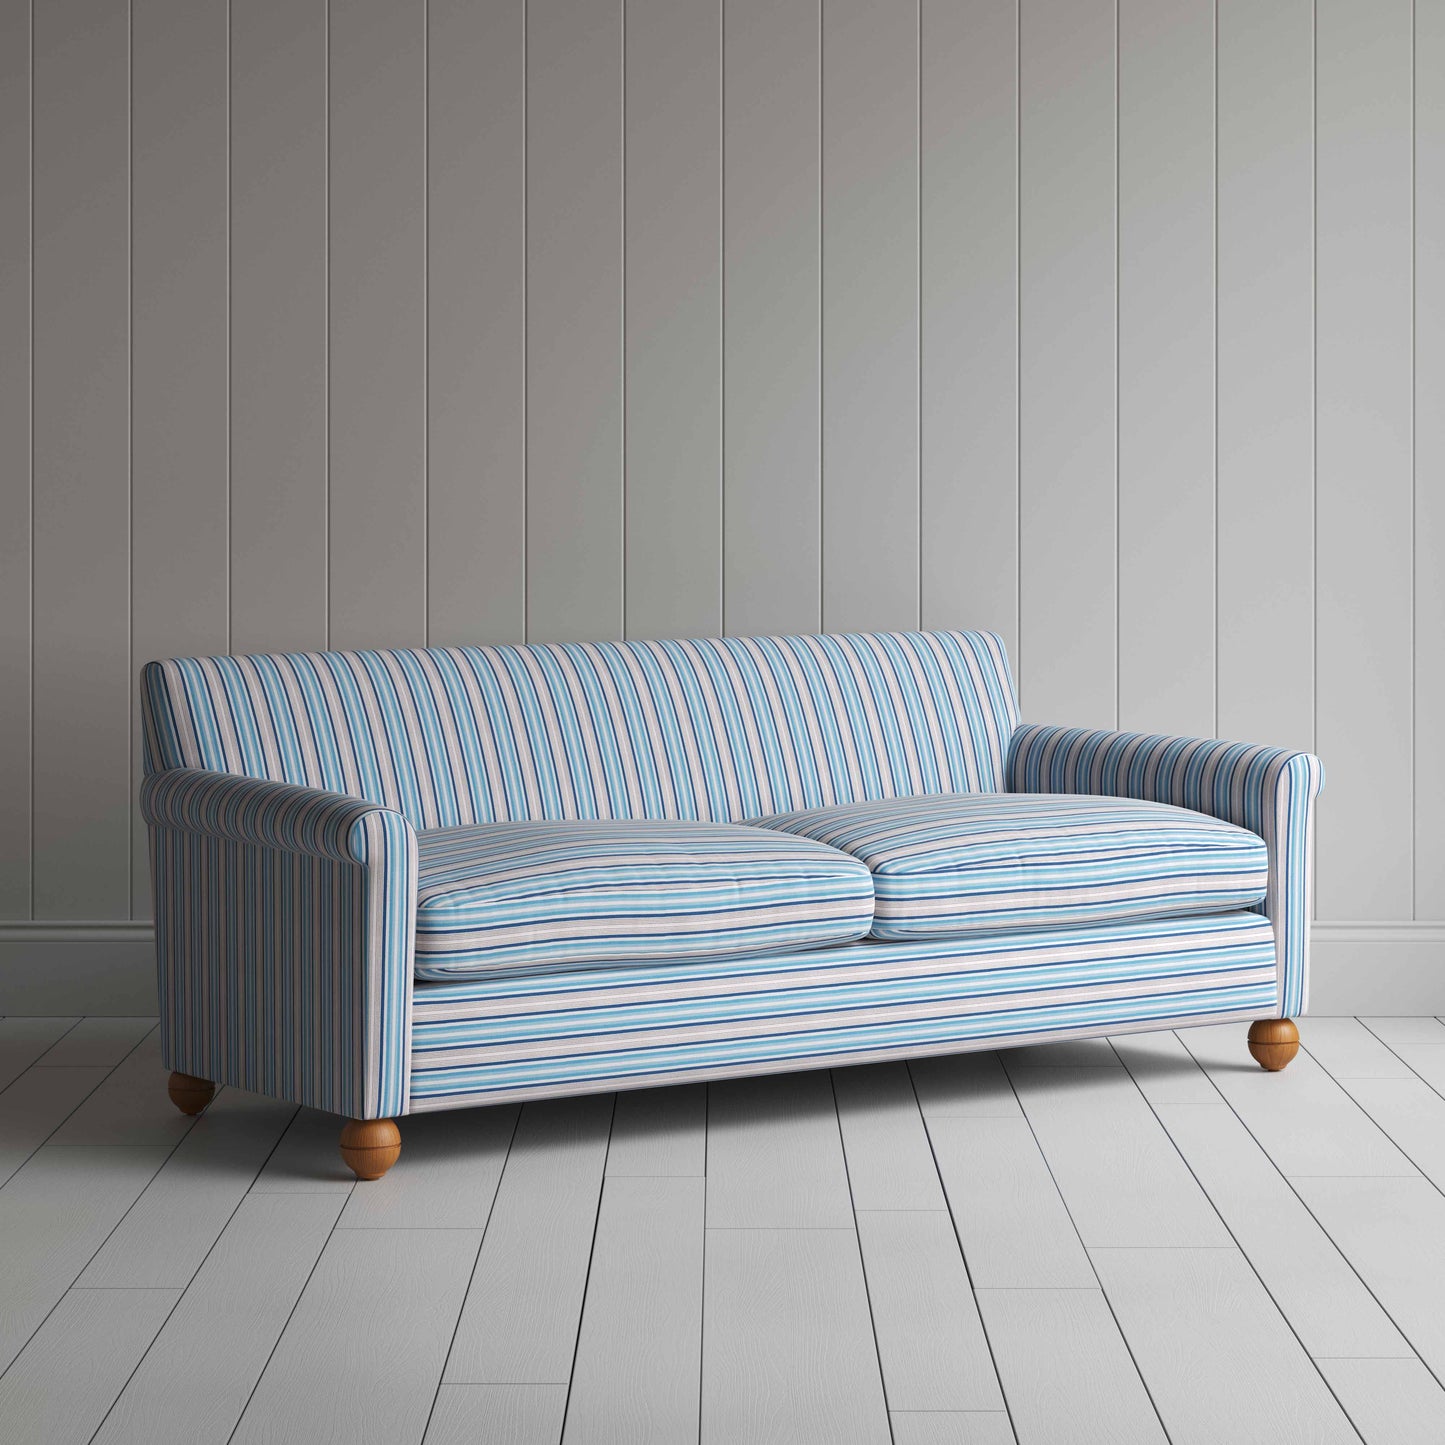 Idler 4 Seater Sofa in Slow Lane Cotton Linen, Blue